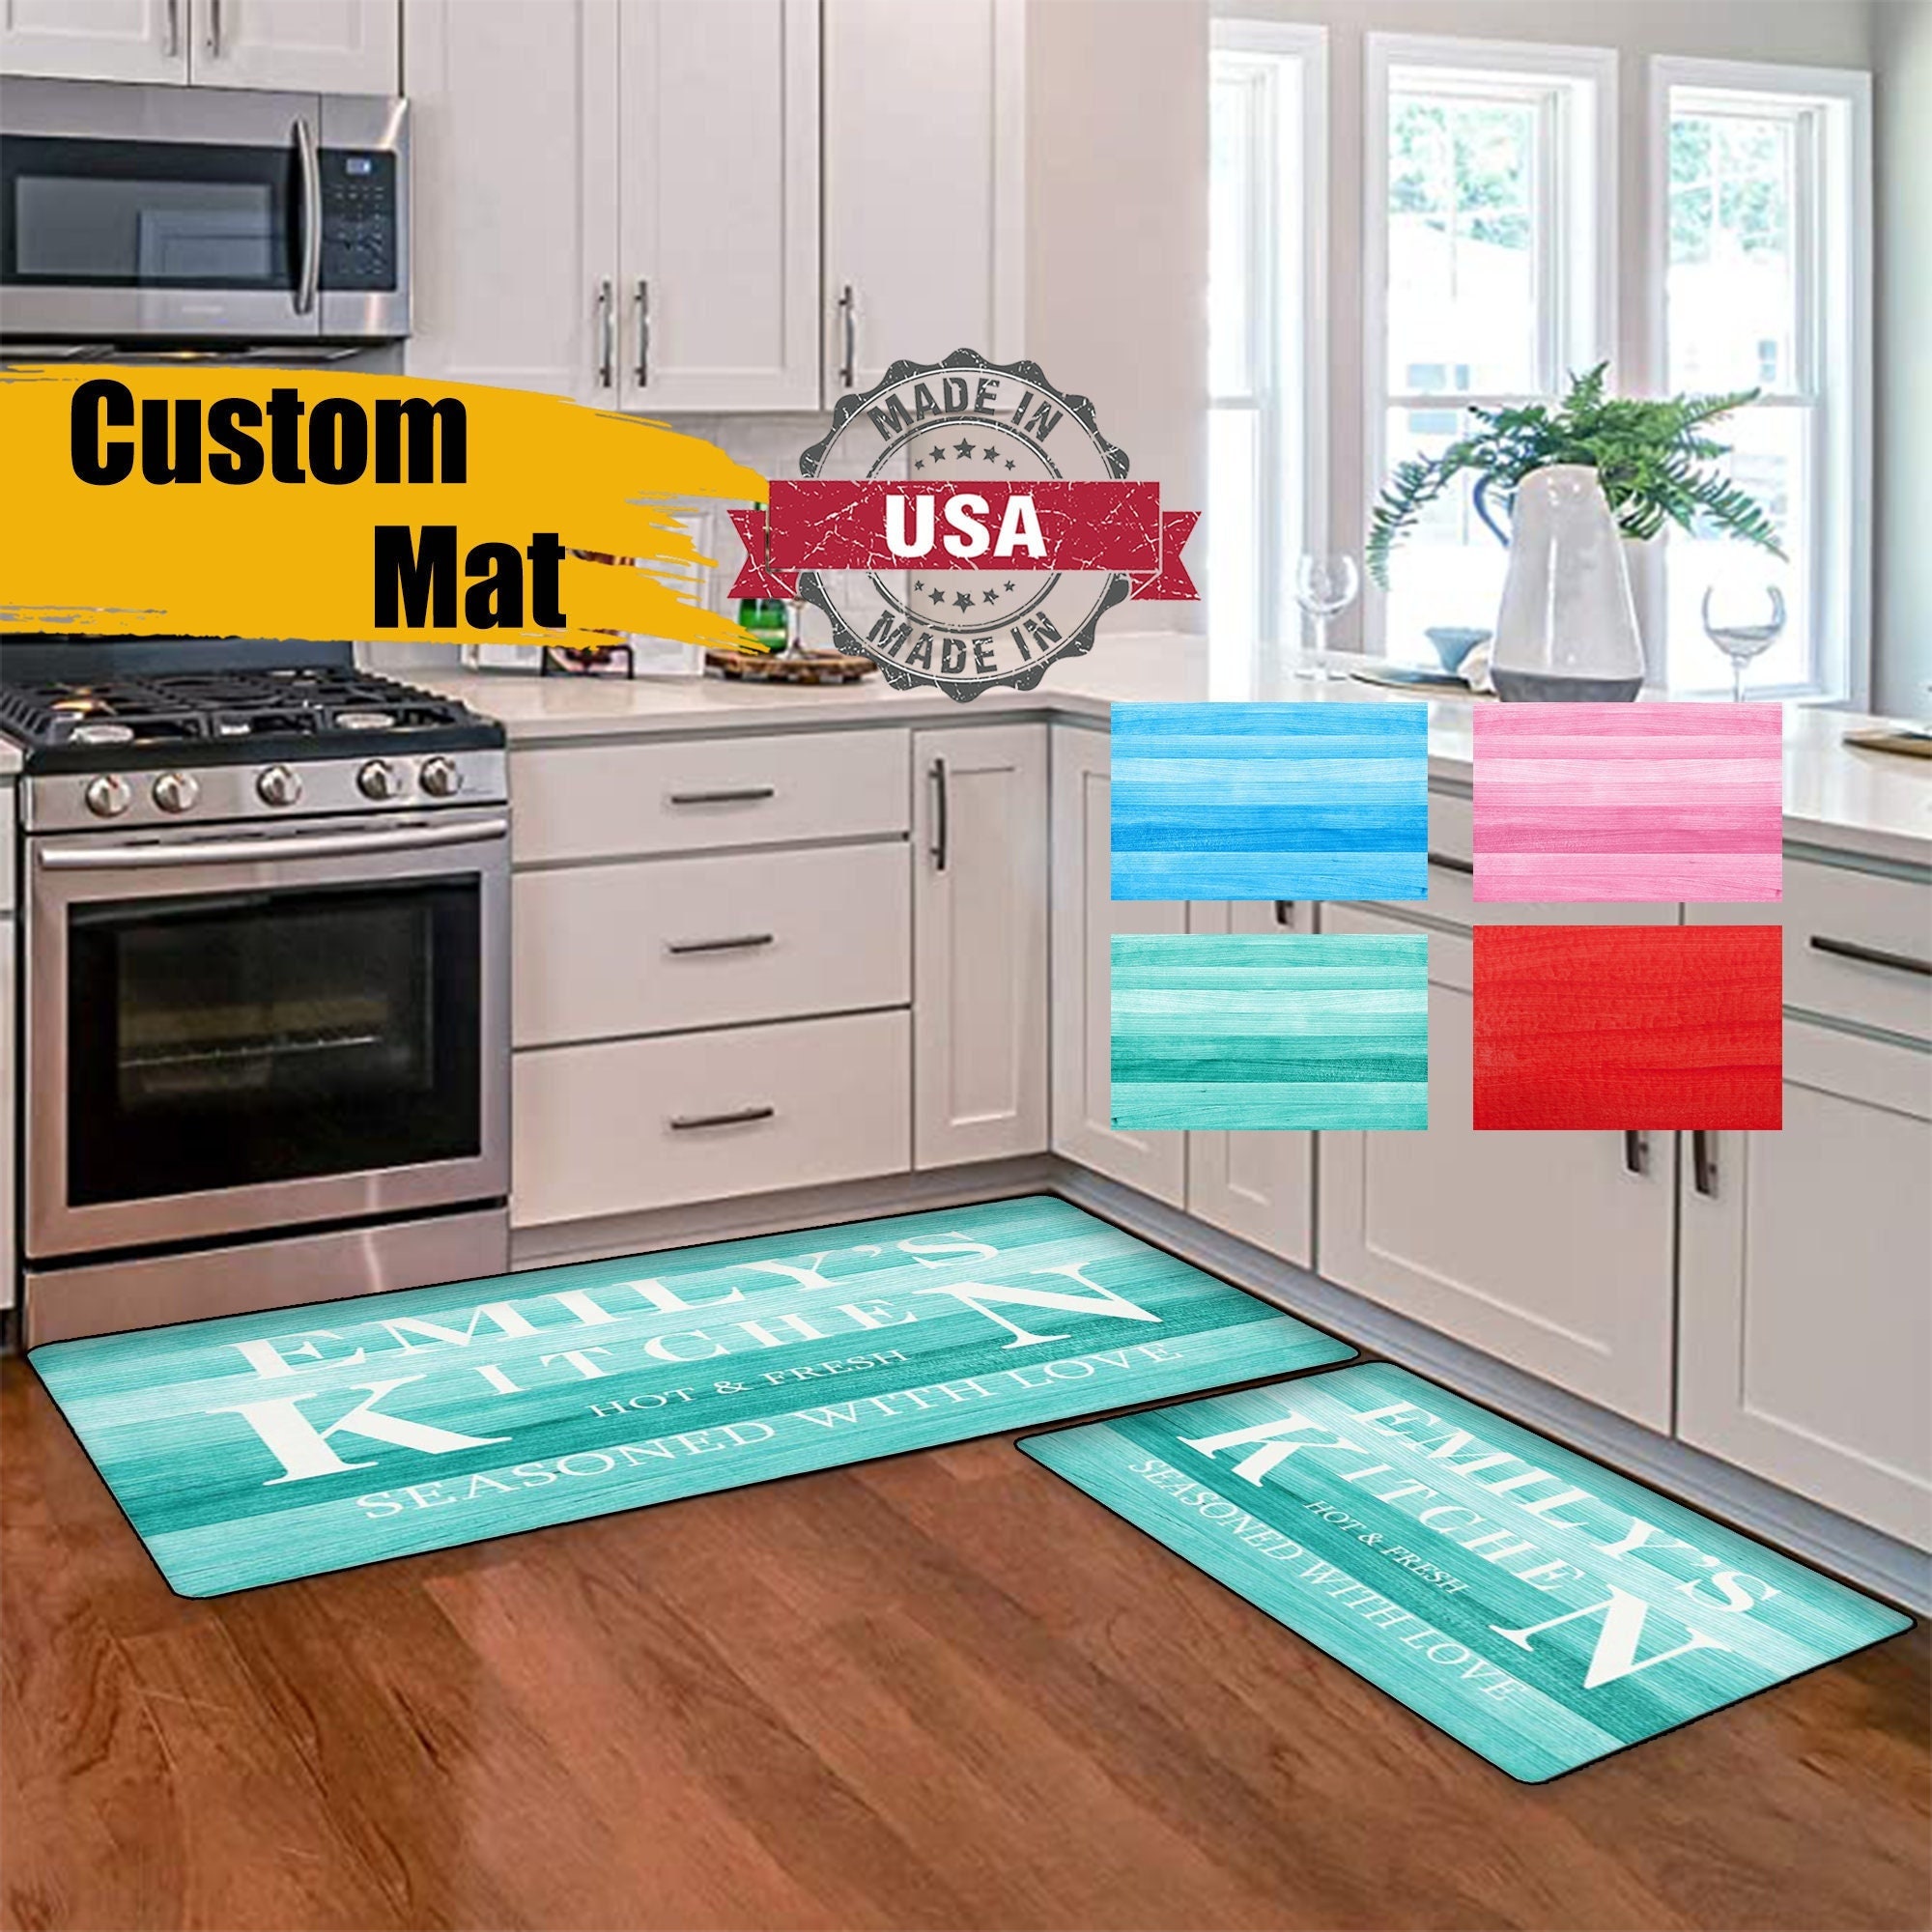 Personalized Kitchen Mats, Anti-Fatigue Mat Manufacturer